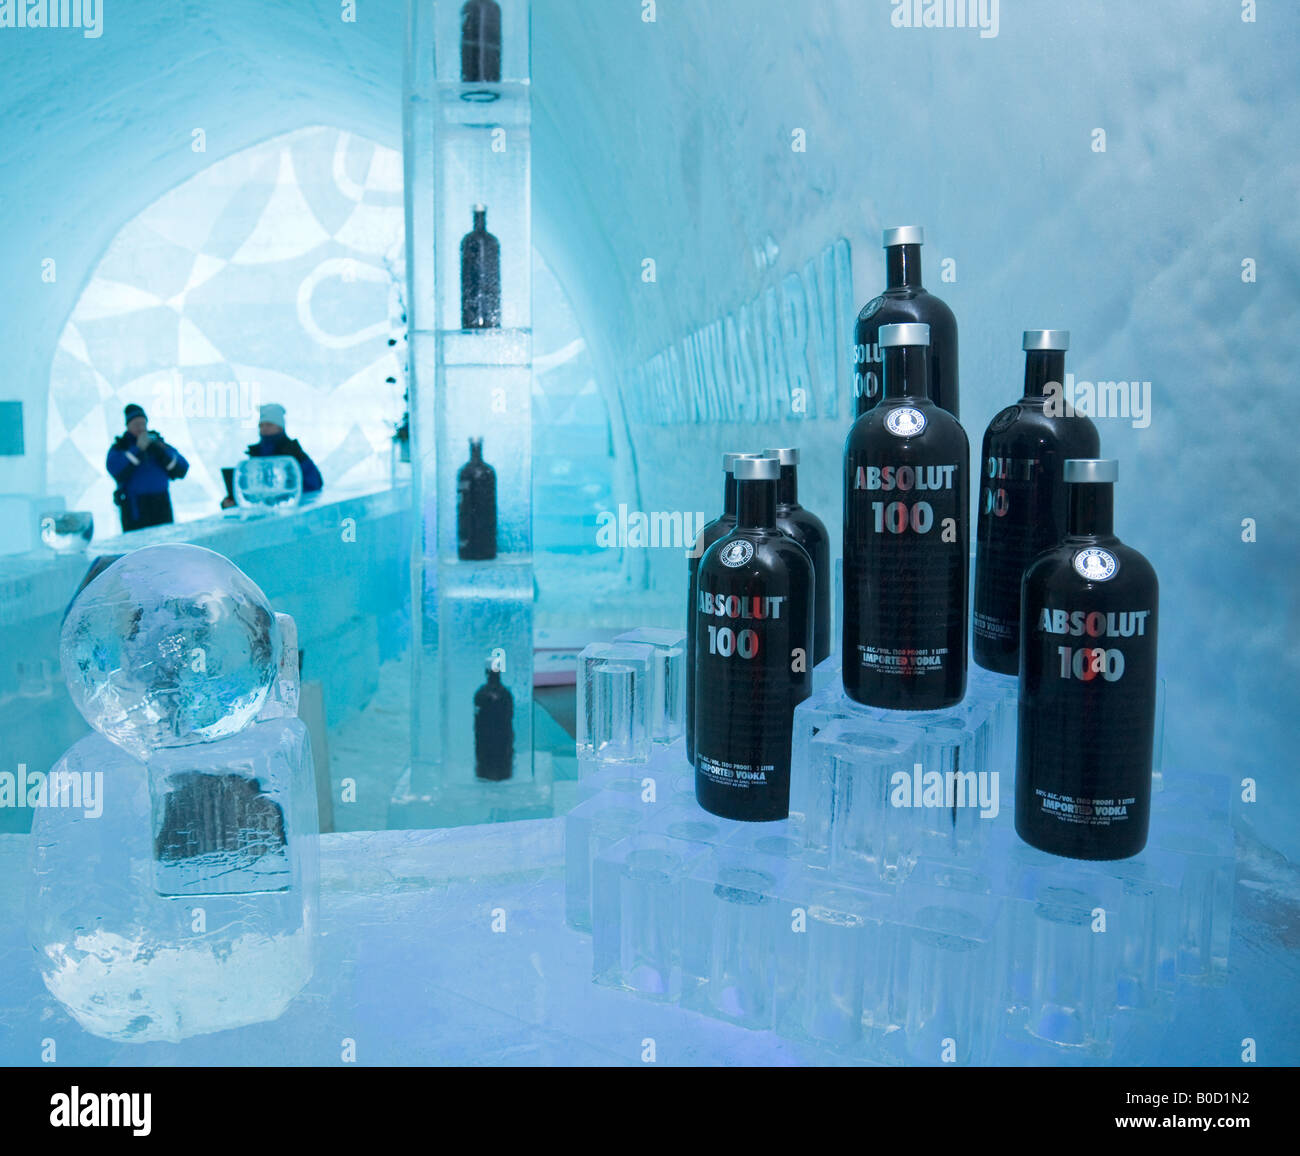 Absolut vodka bottles in the Absolut icebar inside the Jukkasjarvi icehotel in northern Sweden Stock Photo